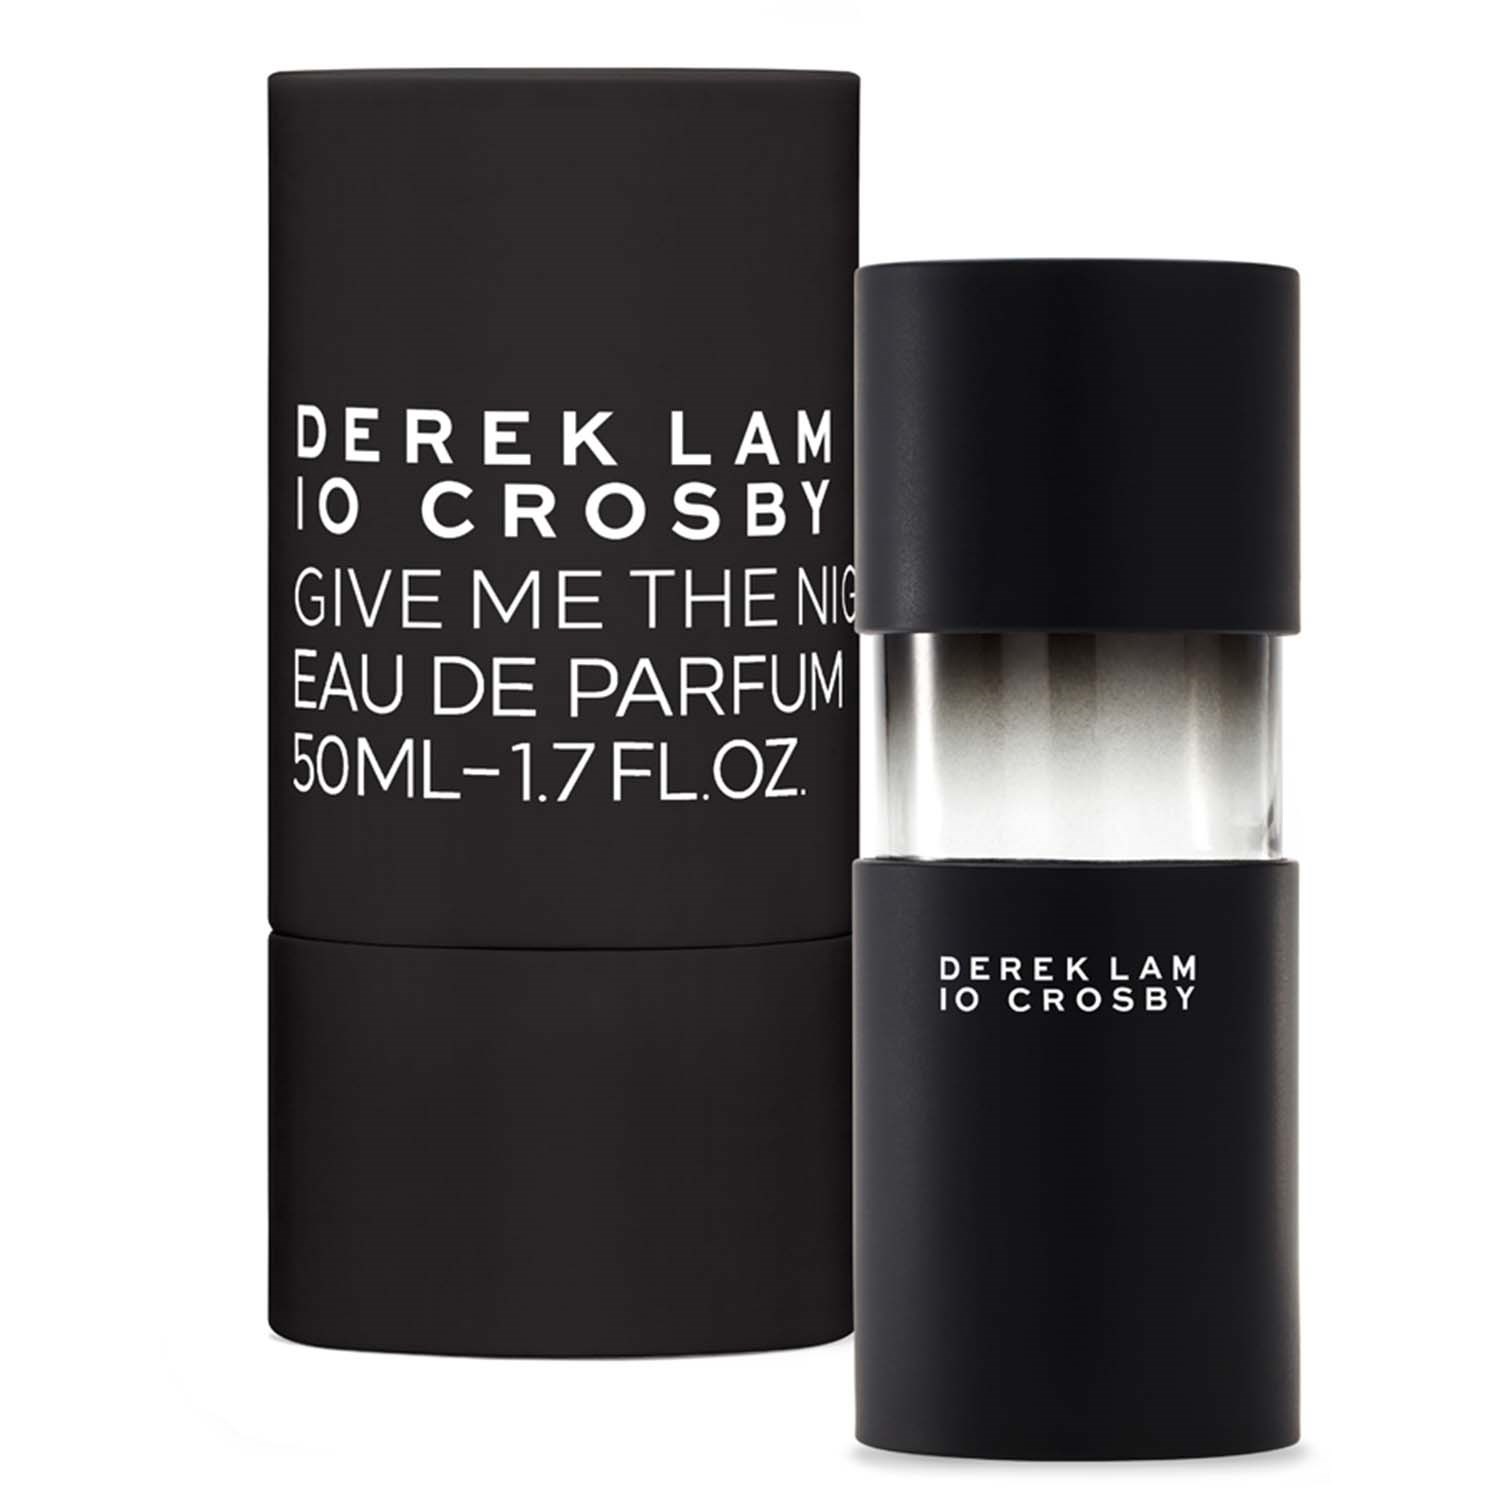 Läs mer om Derek Lam 10 Crosby Give Me The Night Eau de Parfum 50 ml